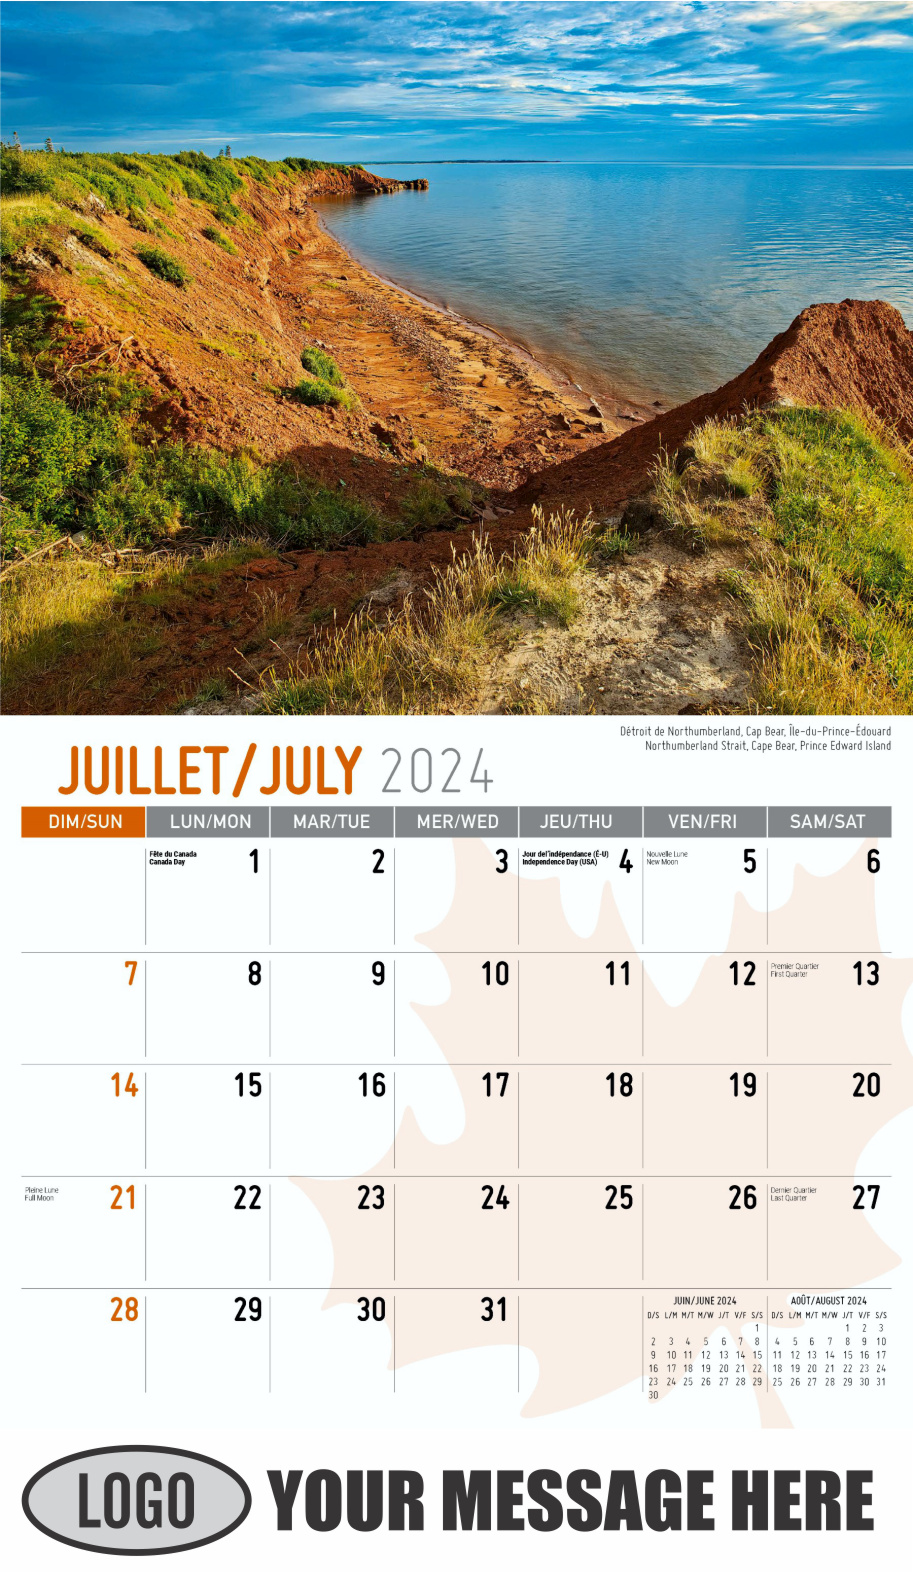 Scenes of Canada 2024 Bilingual Business Advertising Calendar - July